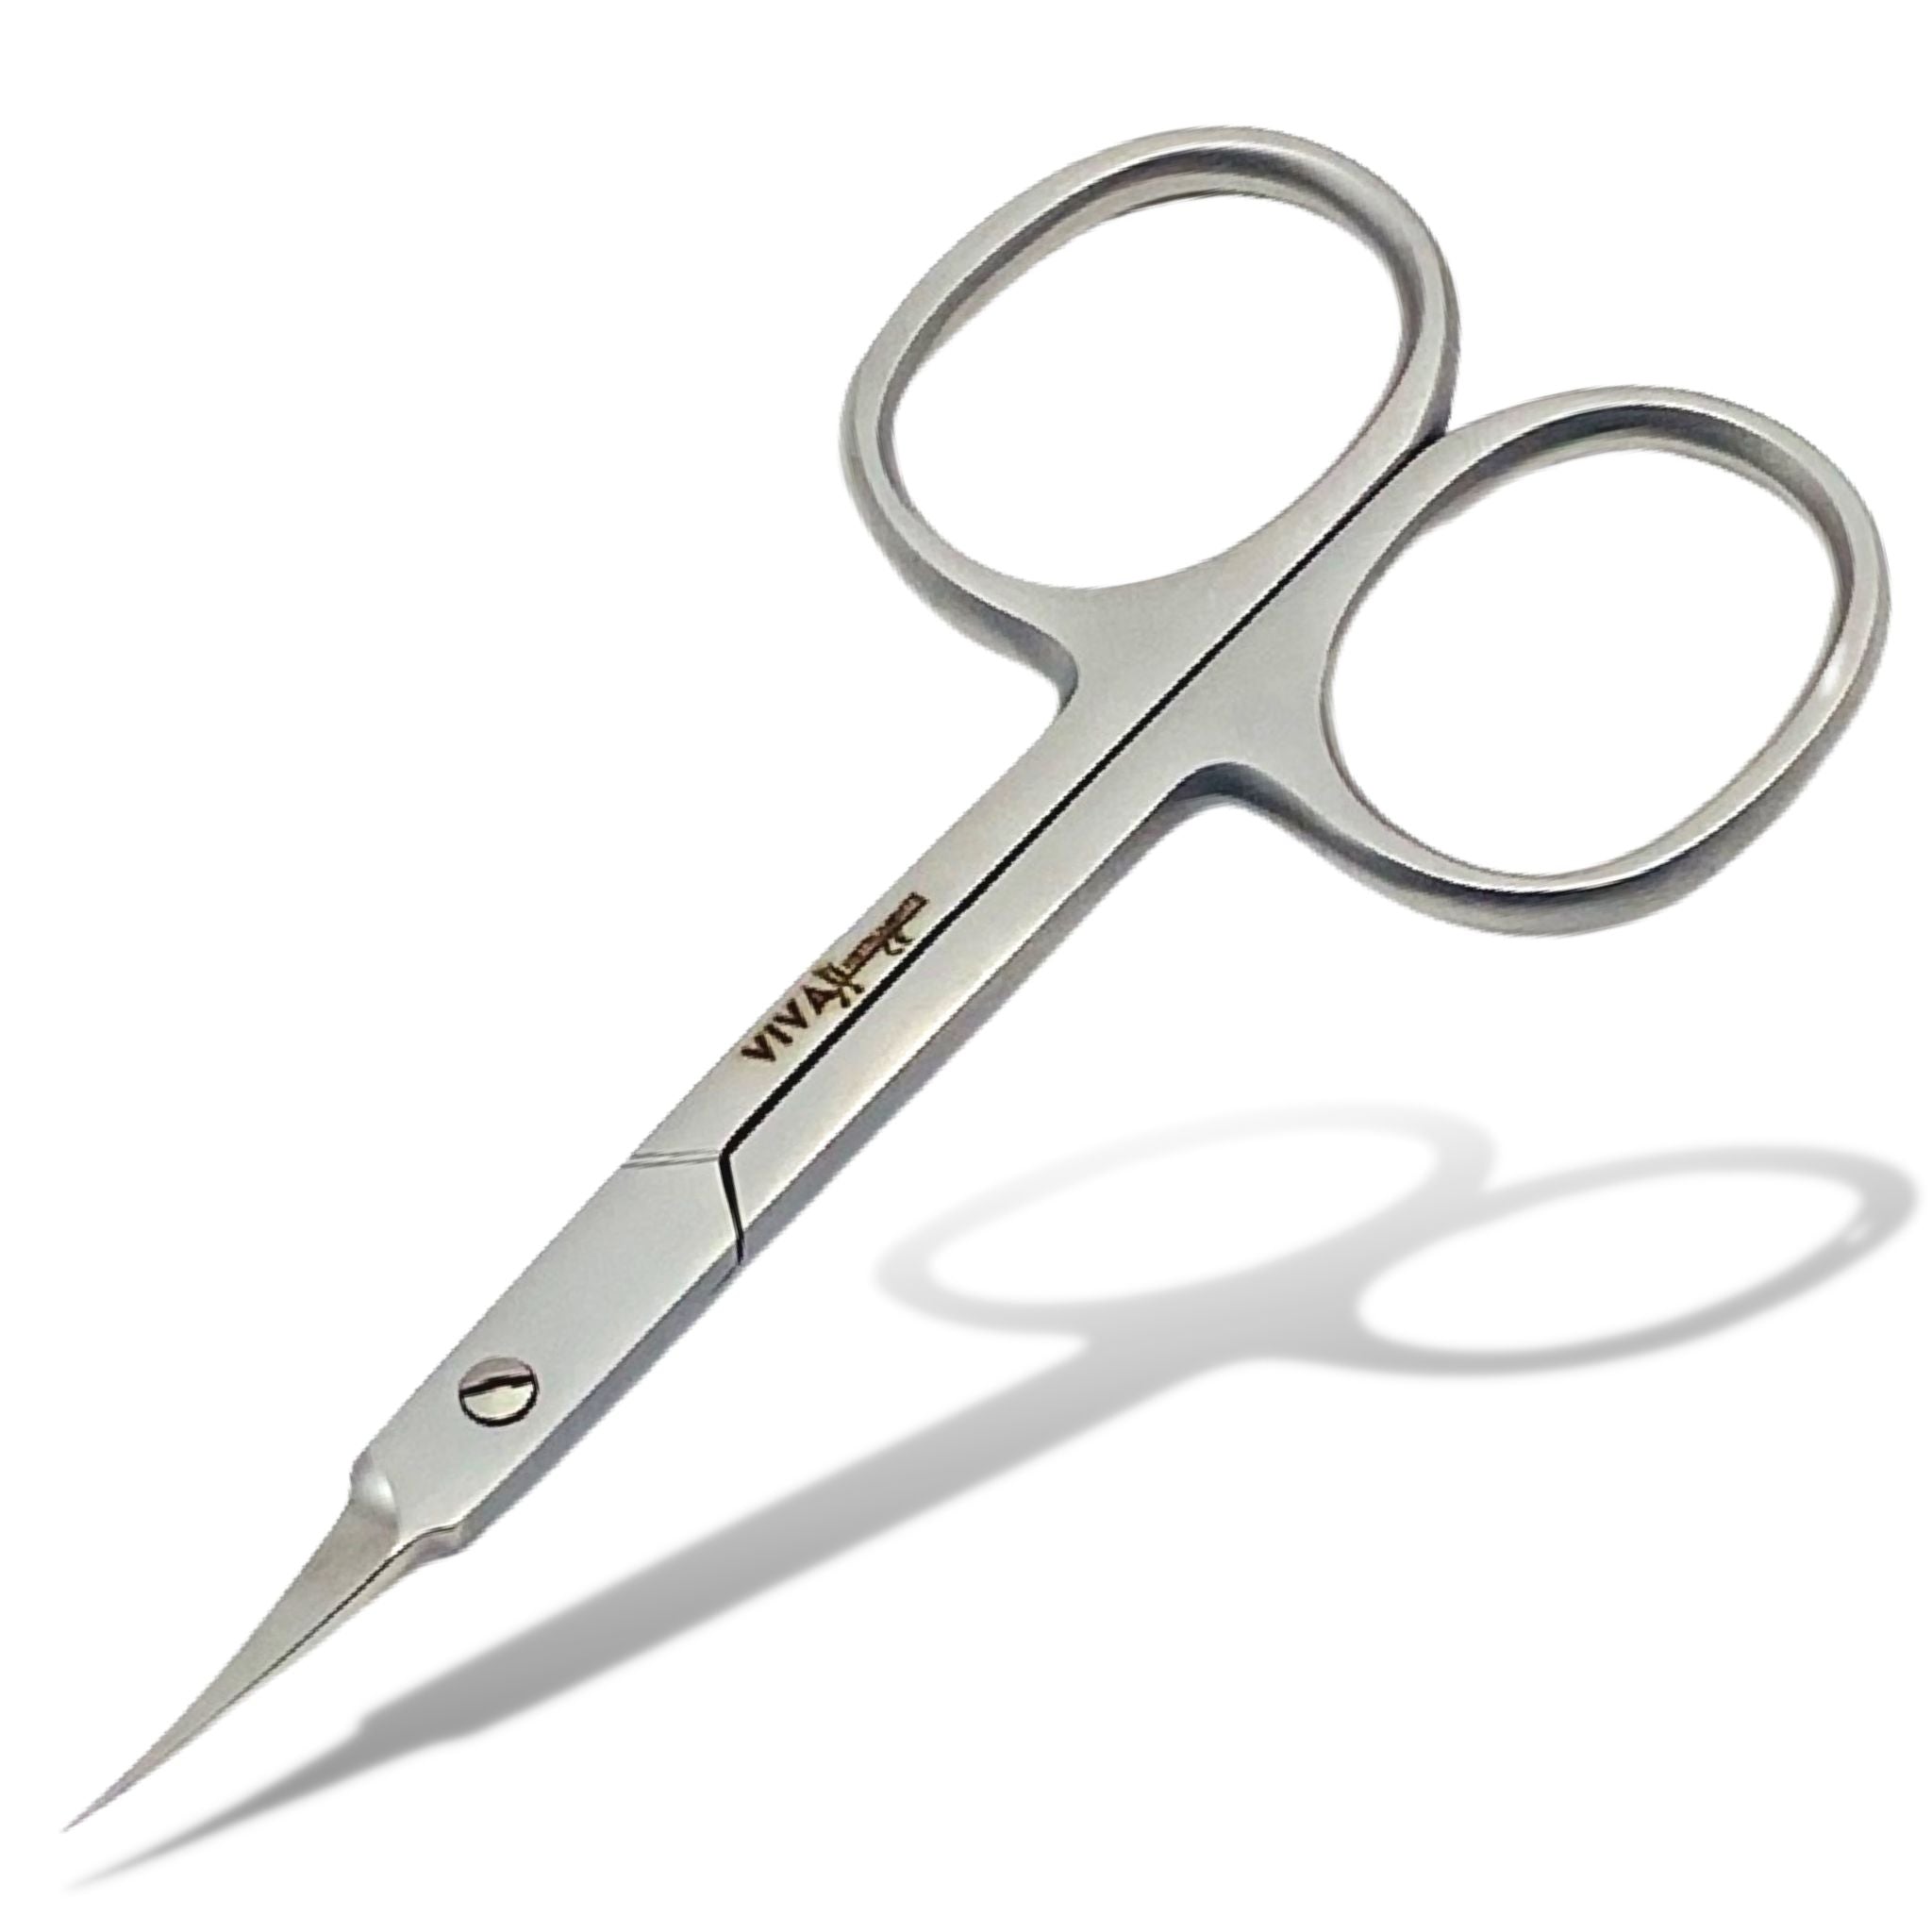 cuticle scissors sharp best quality manicure pedicure tools - viva instruments 